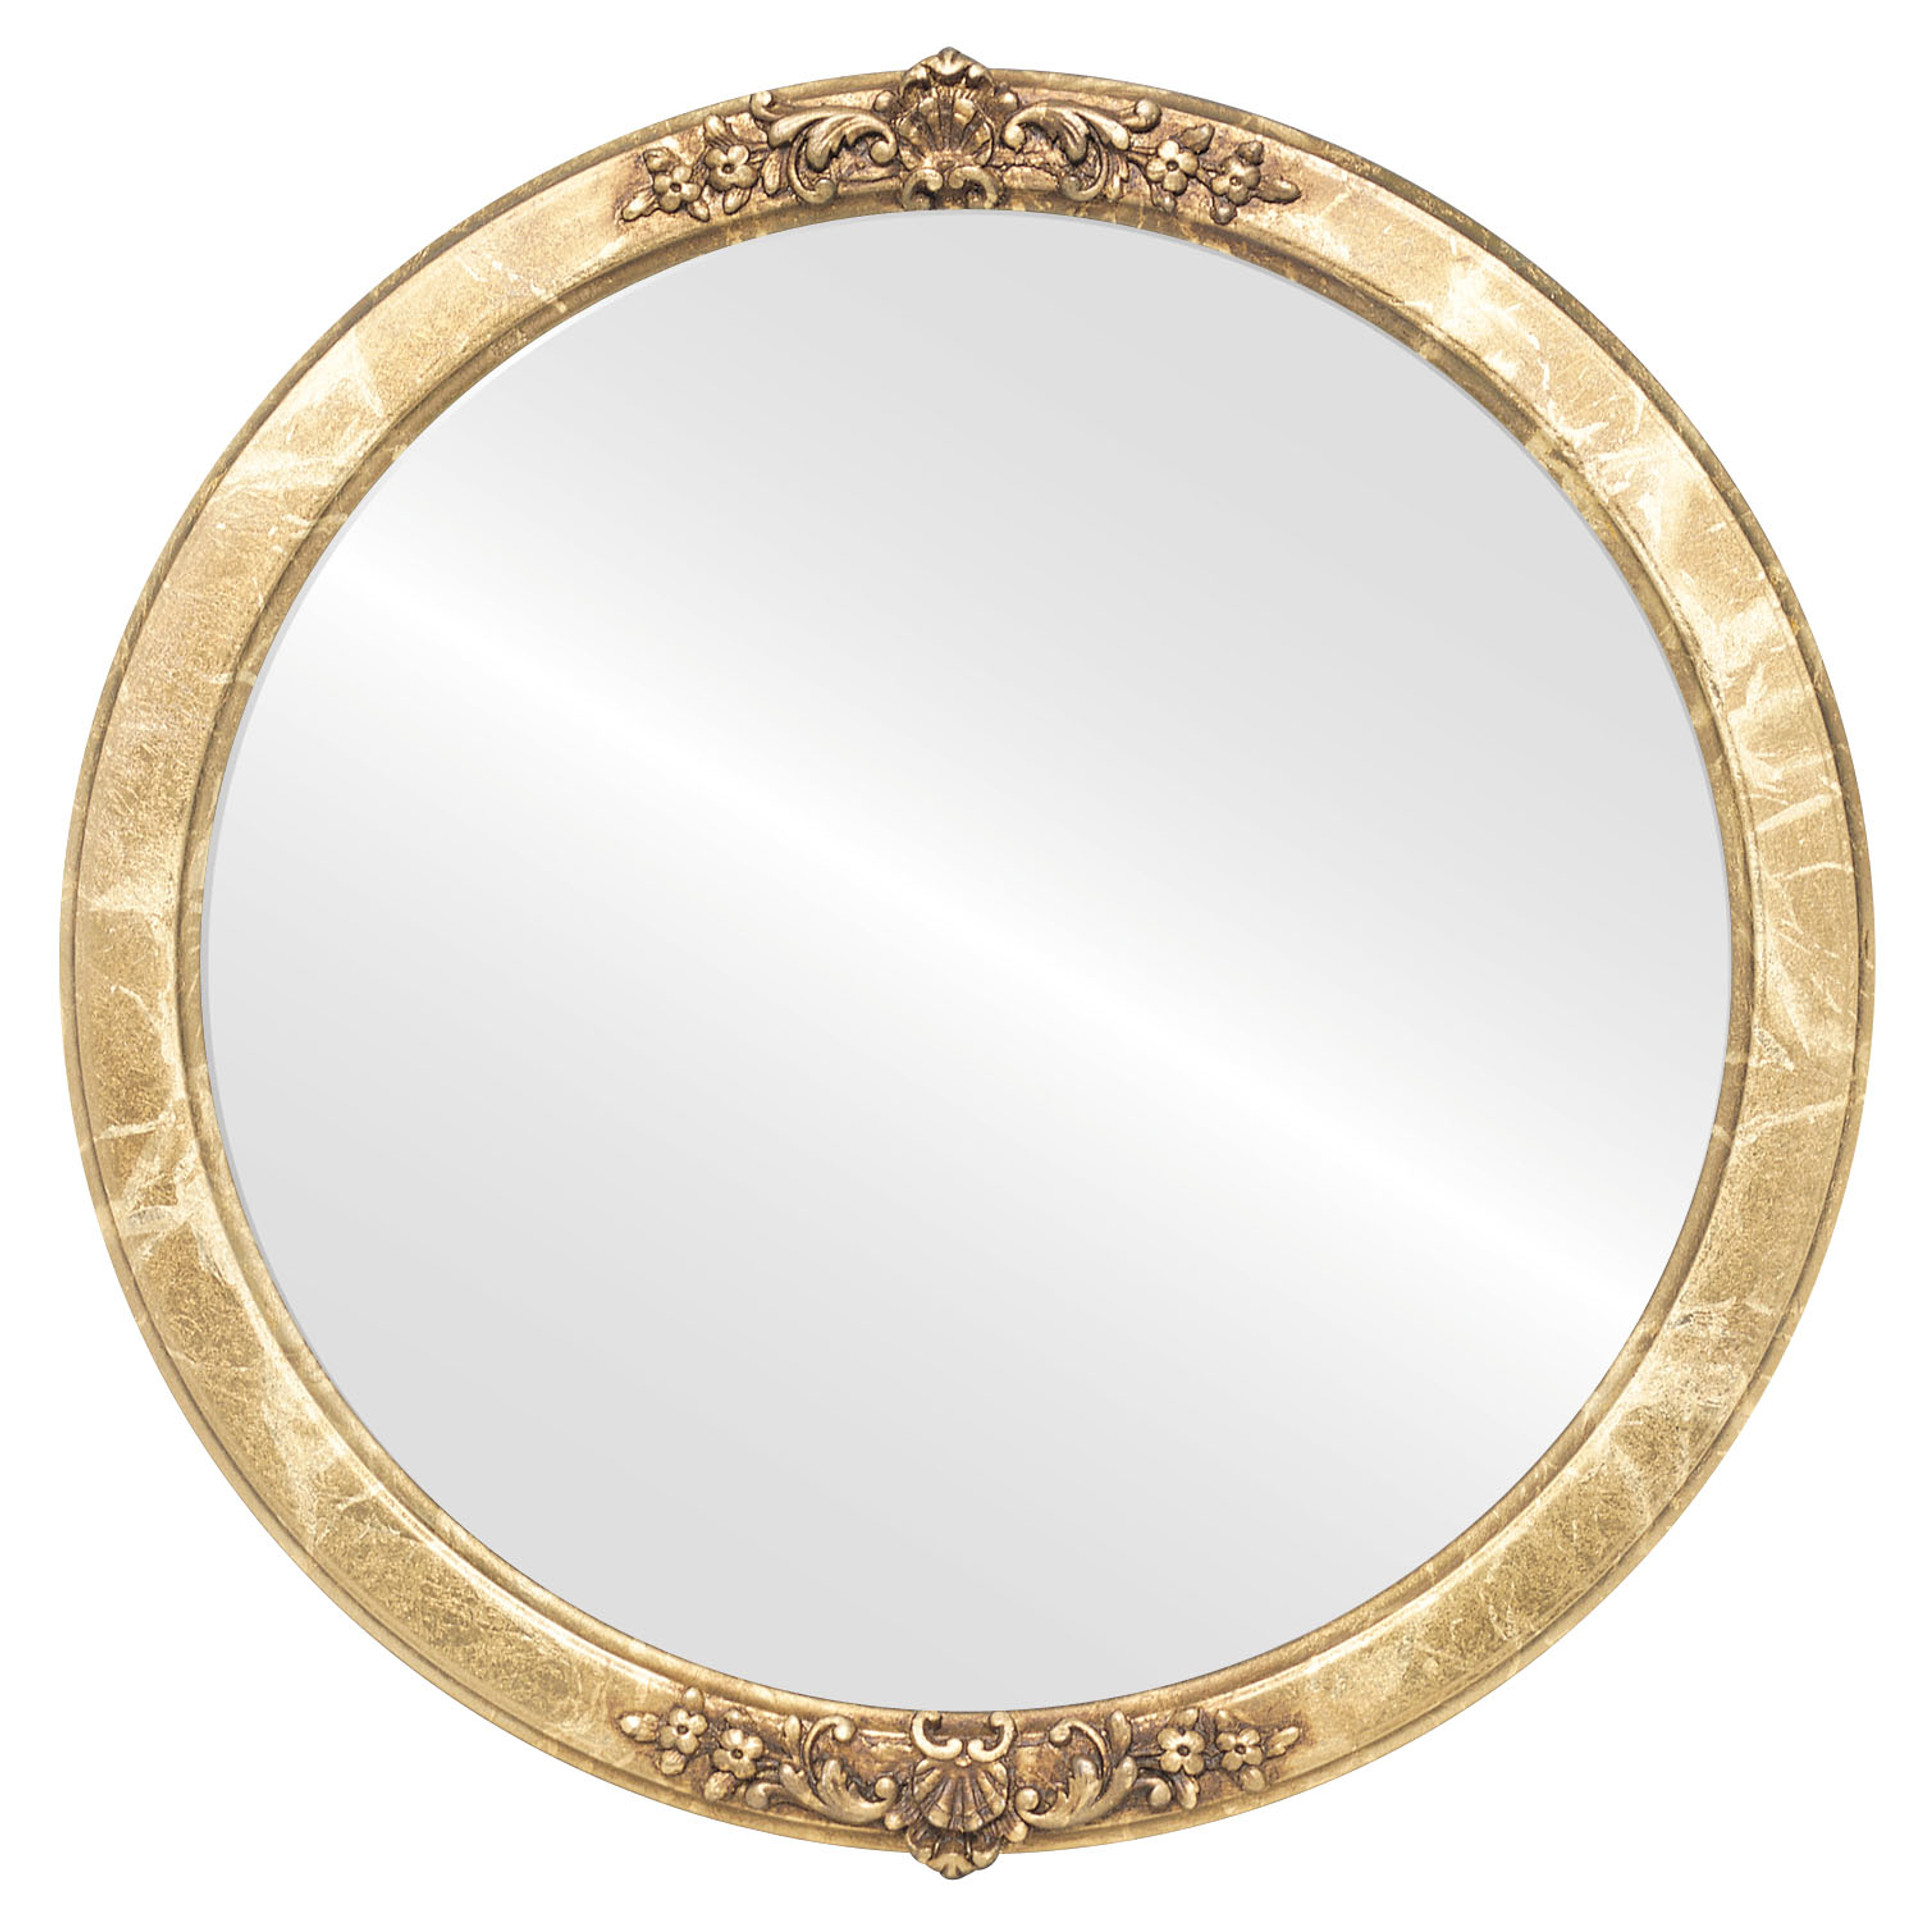 Athena Round framed mirror - Champagne Gold |Victorian Frames